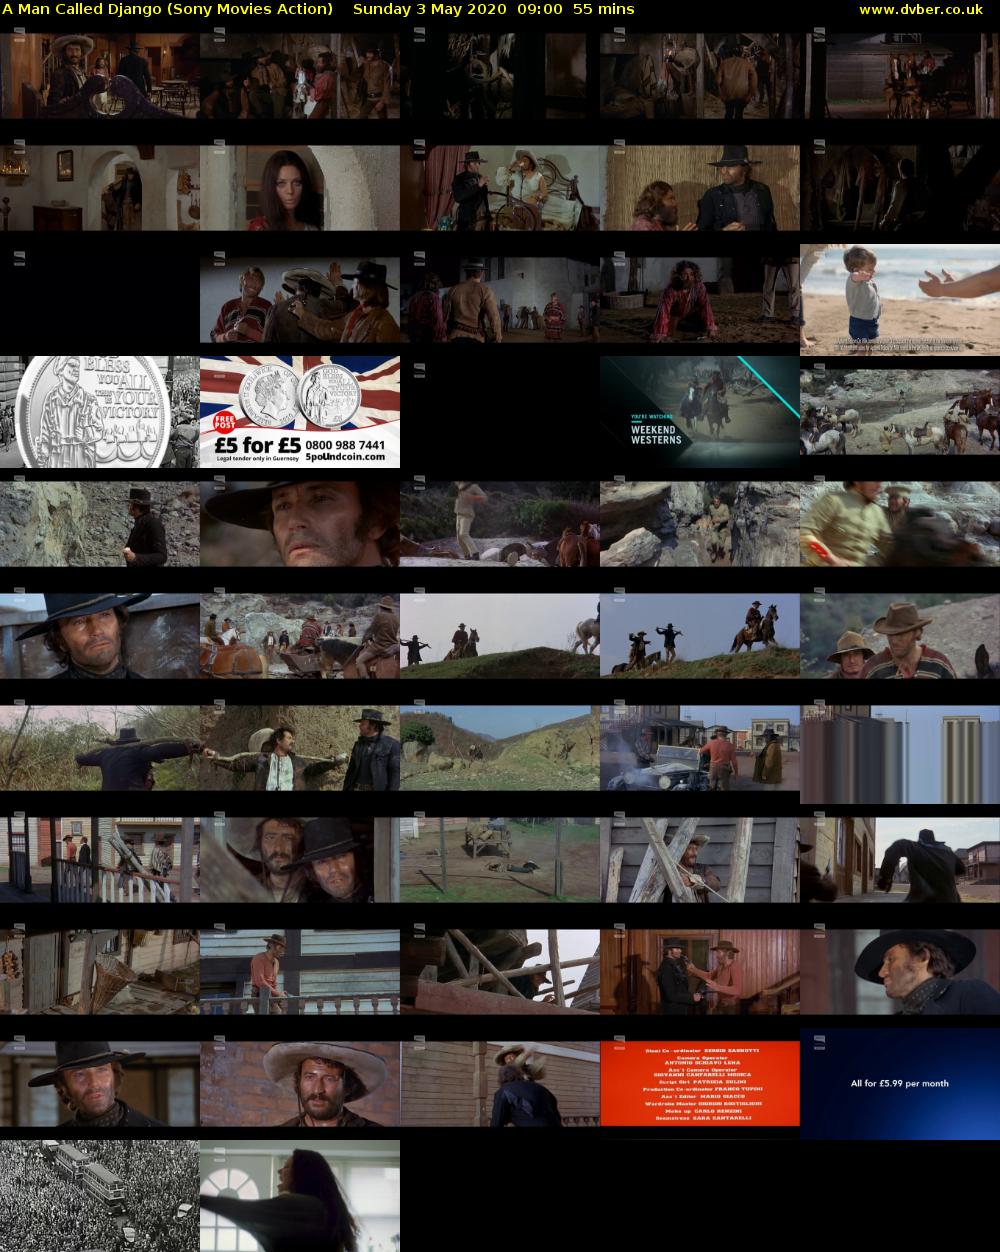 A Man Called Django (Sony Movies Action) Sunday 3 May 2020 09:00 - 09:55